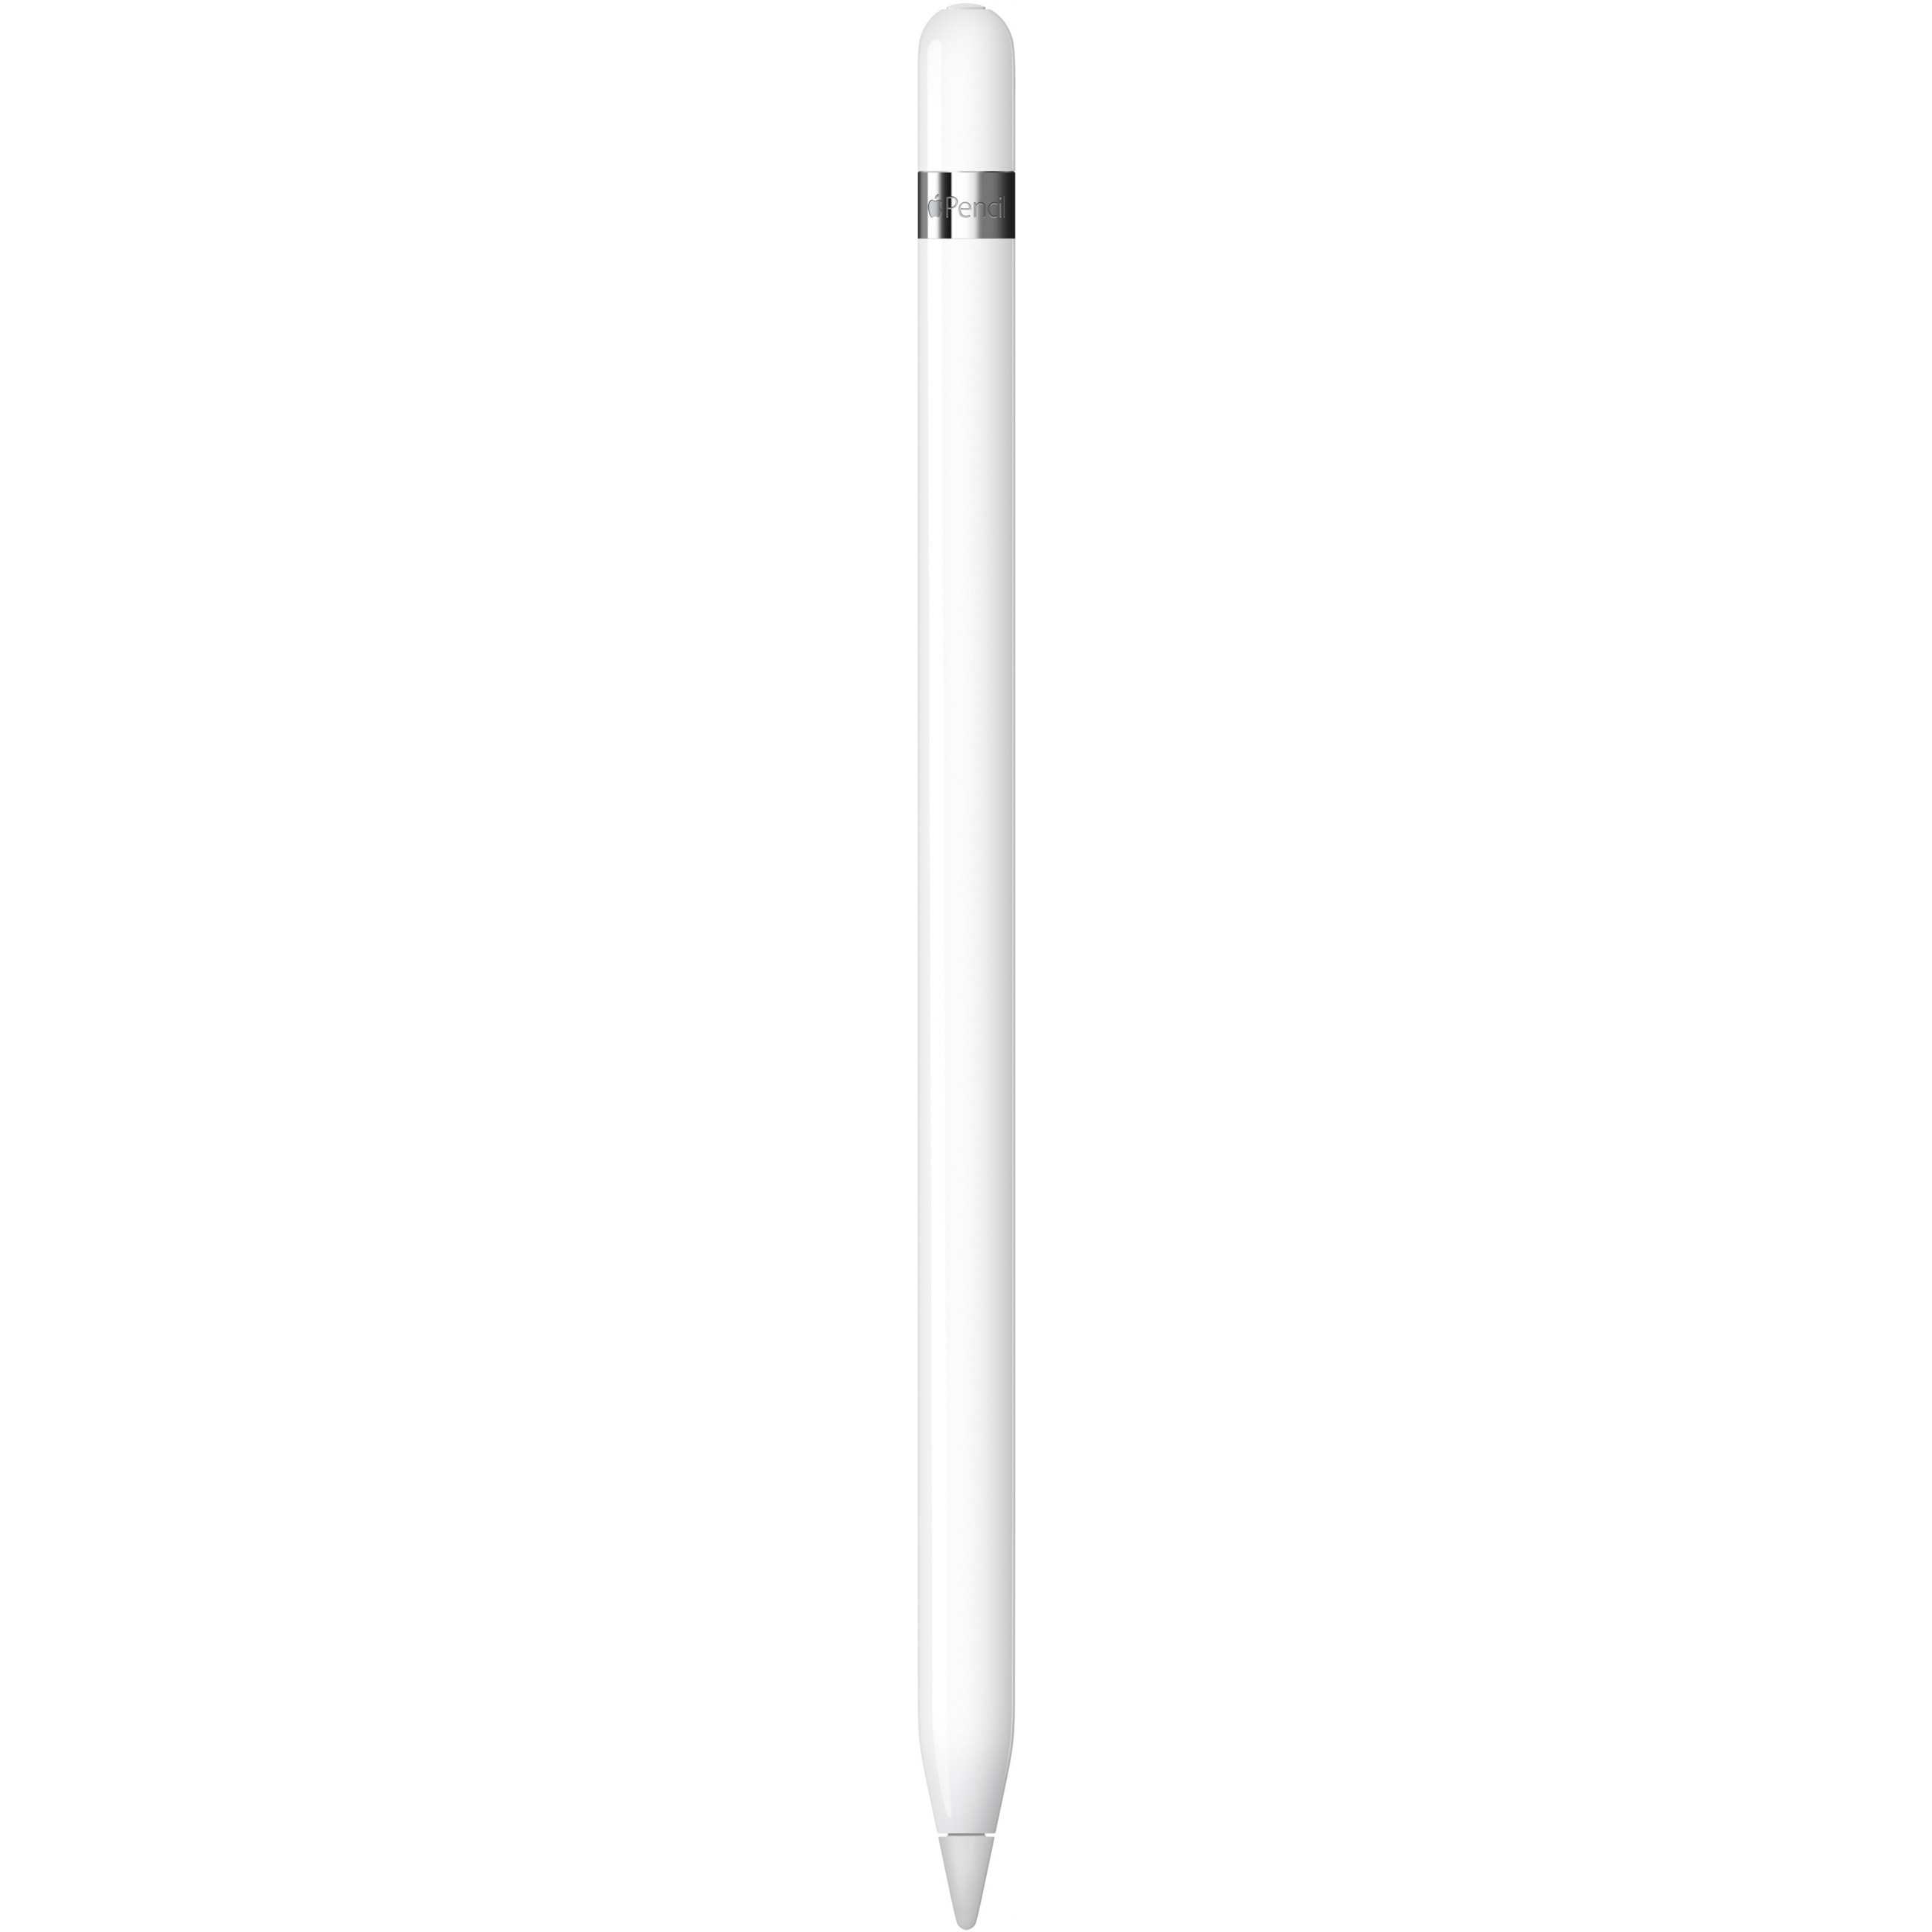 Apple Pencil (1st generation) stylus pen